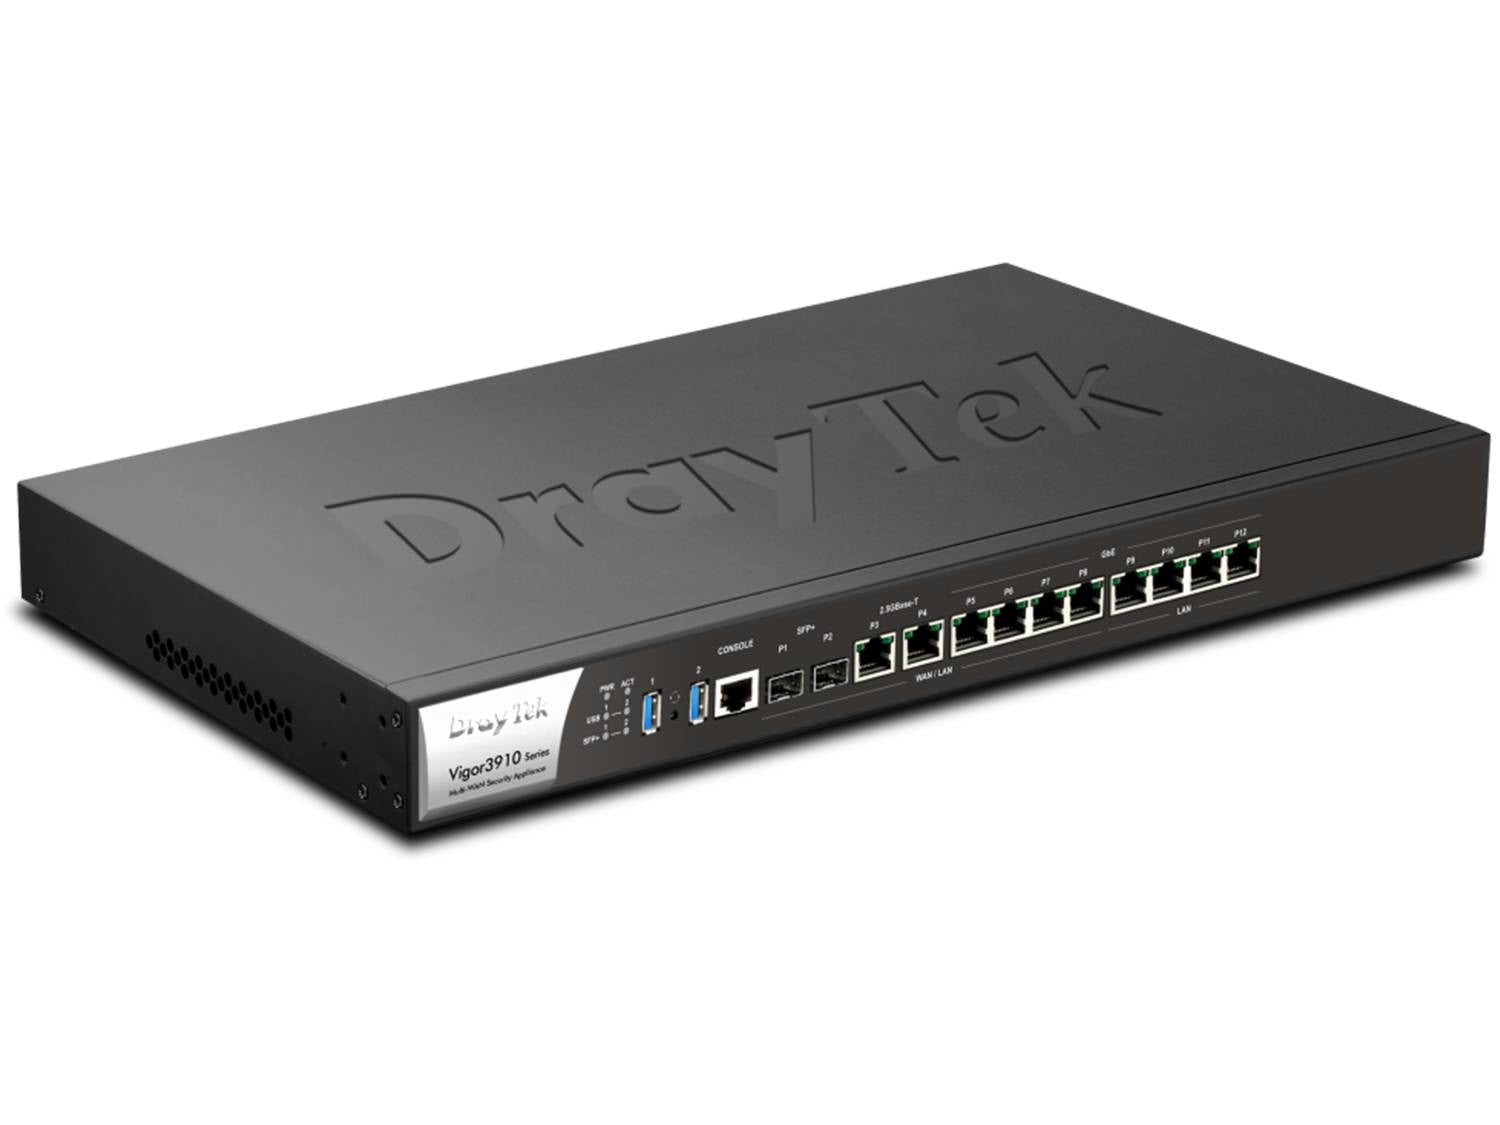 DrayTek Vigor 3910 10G High-Performance Load-Balancing VPN Concentrator